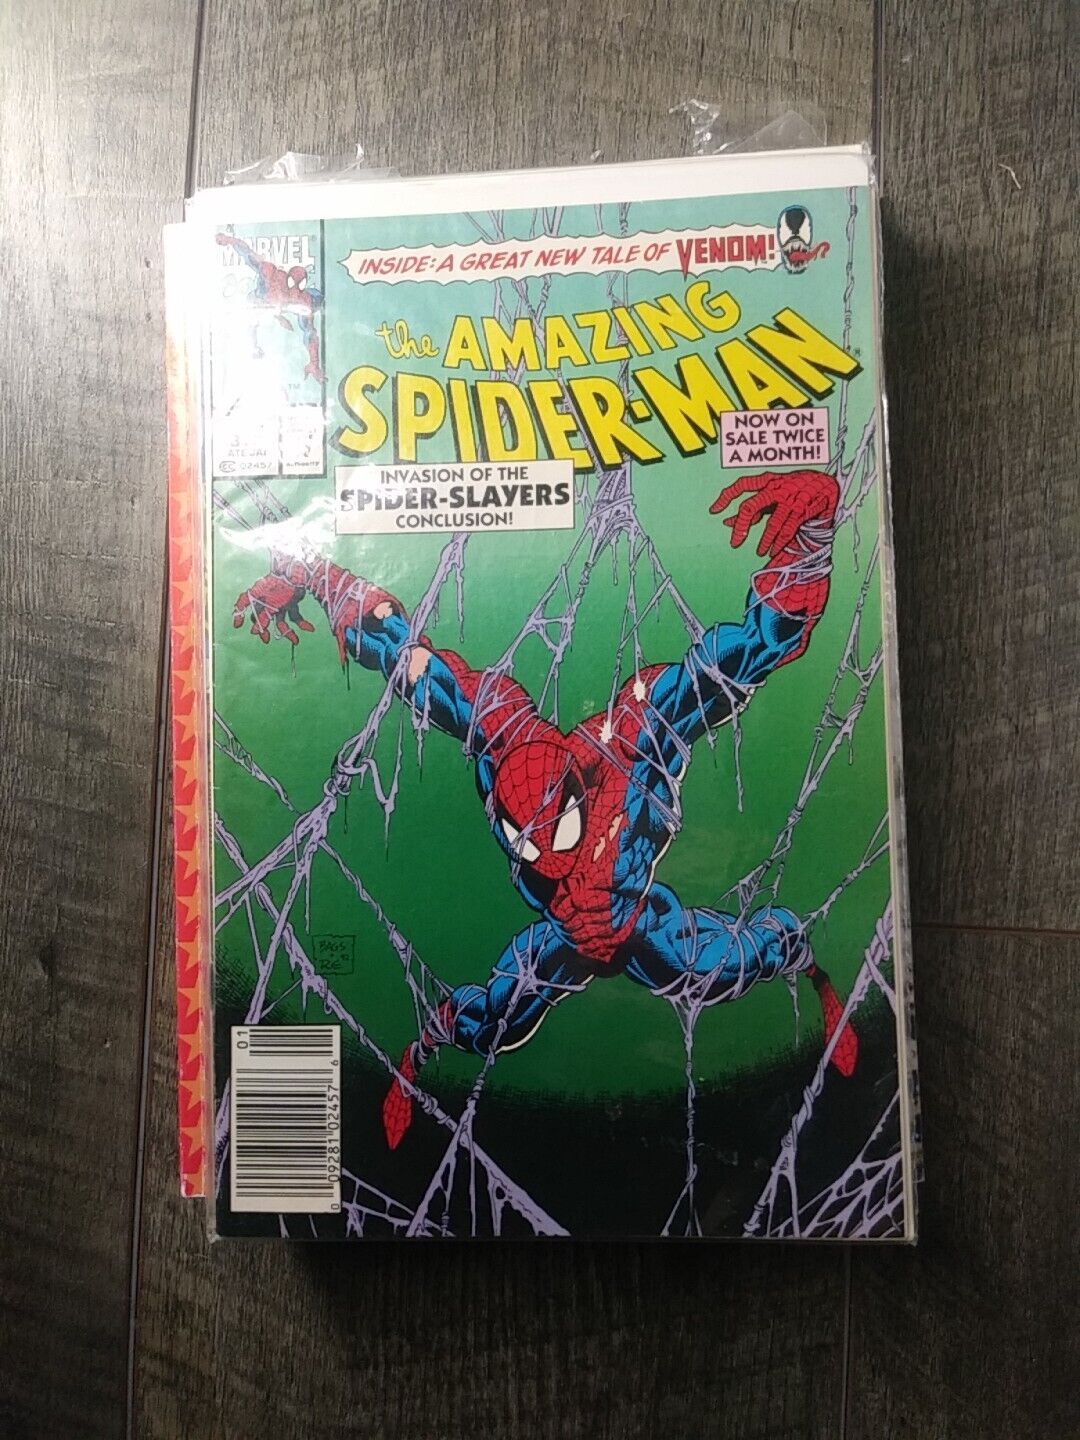 The Amazing Spider-Man #373 (Marvel Comics February 1990)